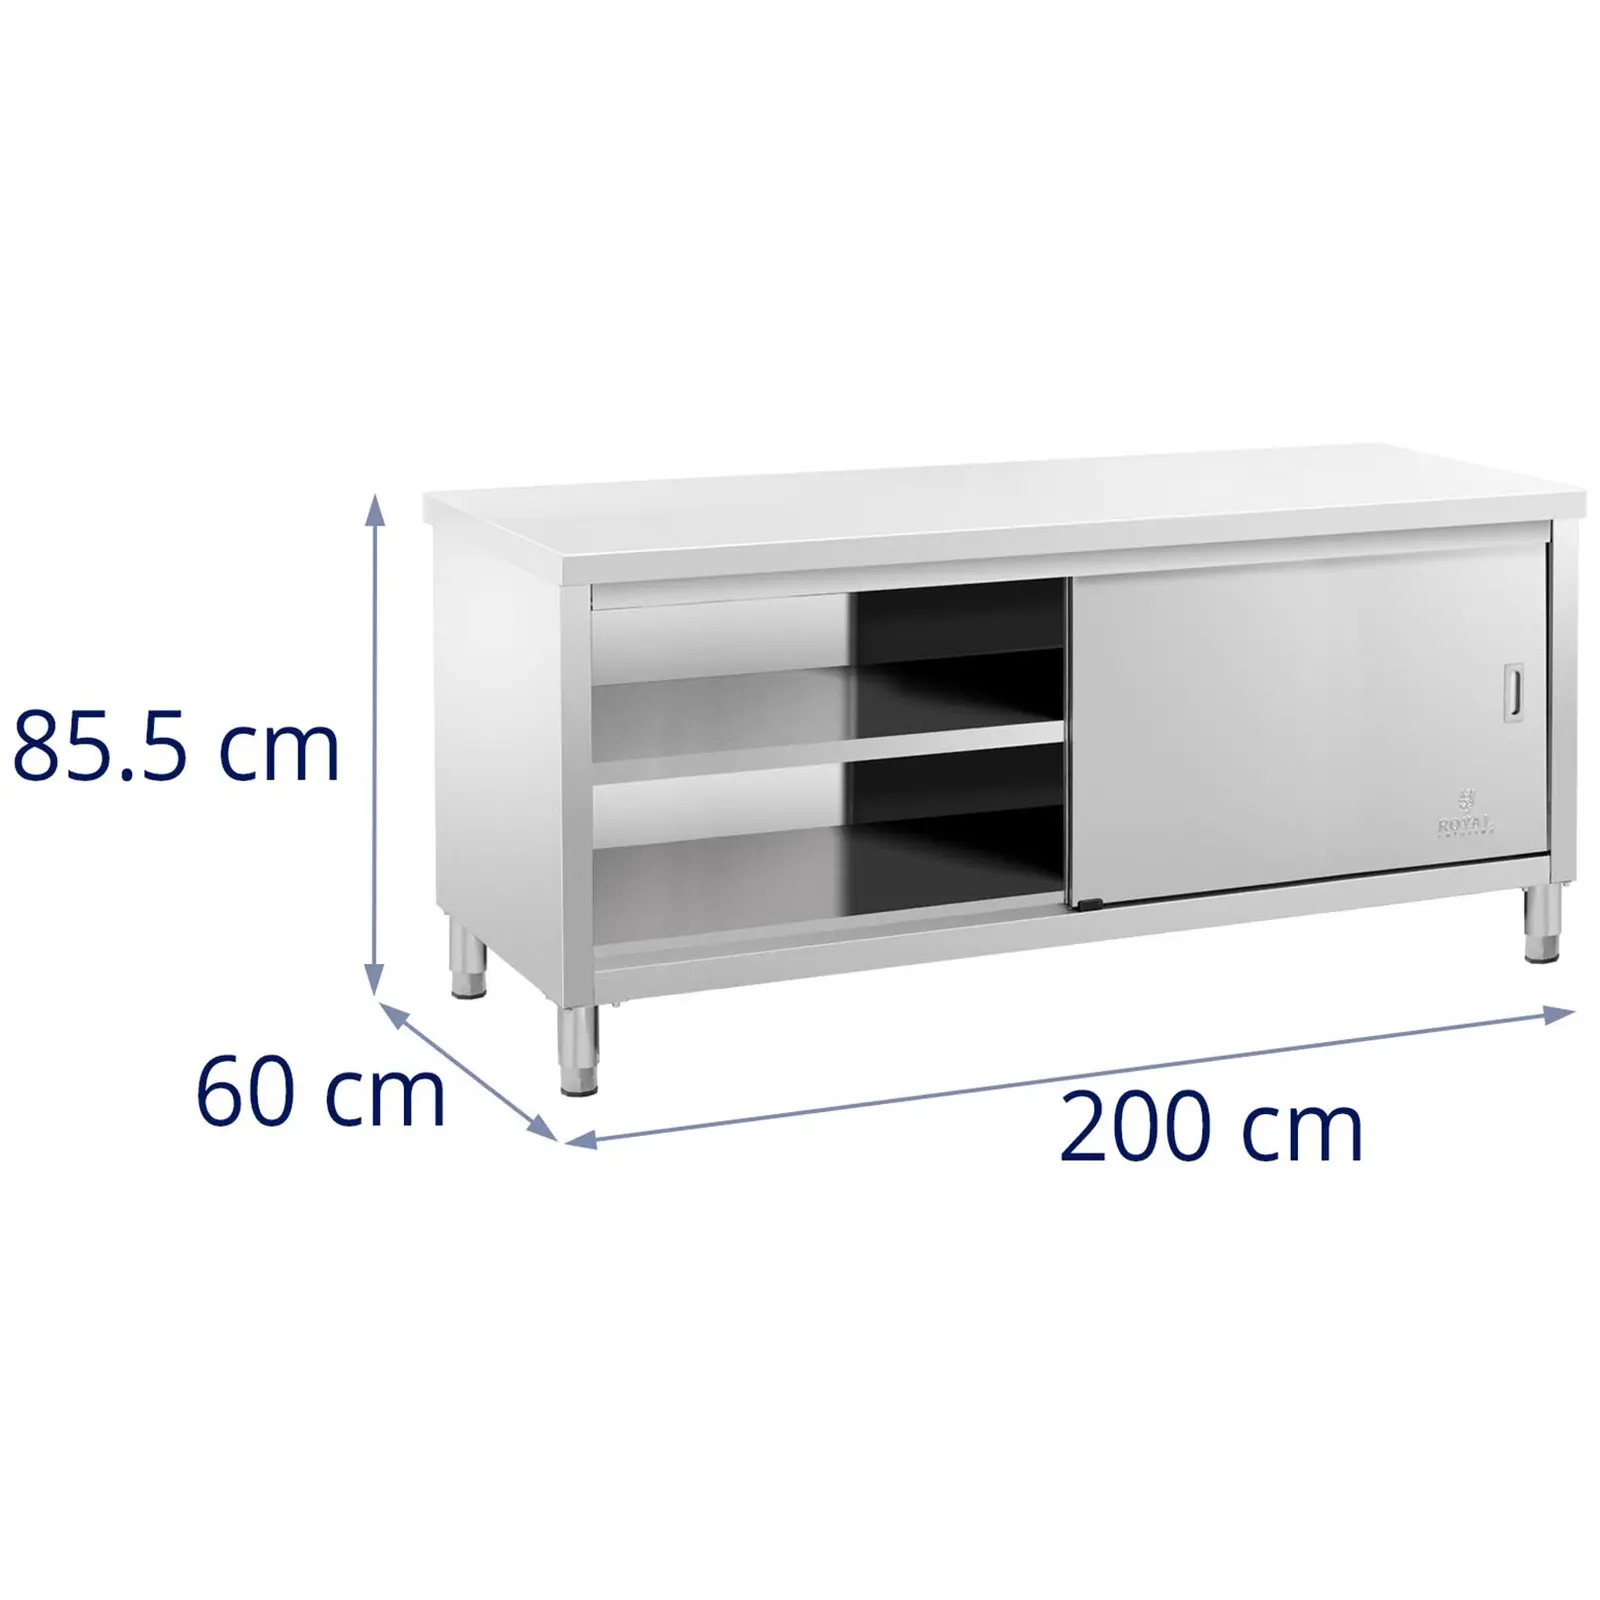 Work Cabinet - 200 x 60 cm - 600 kg load capacity